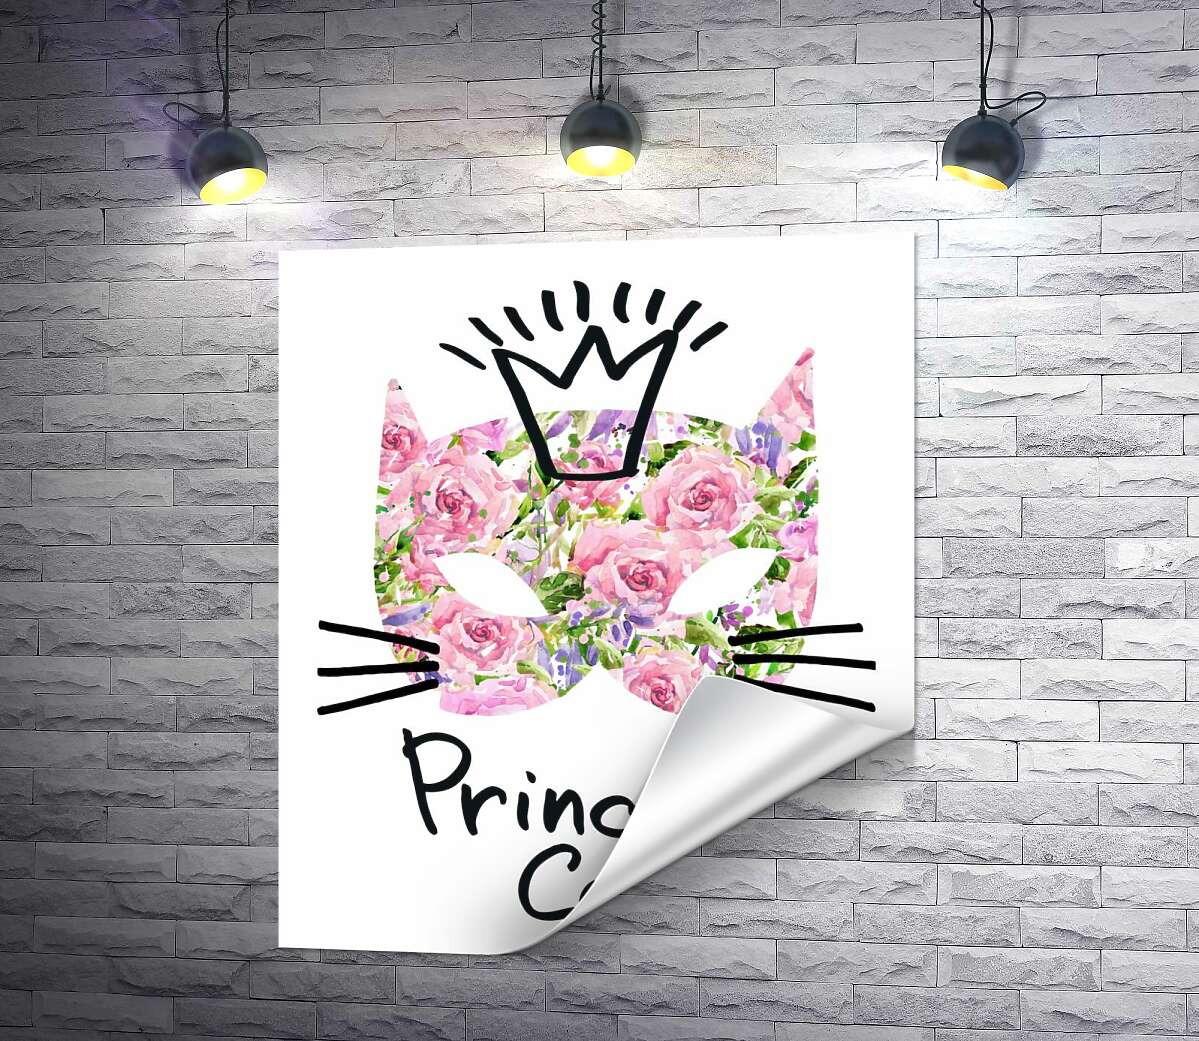 друк Трояндова маска кота з написом "princess cat"